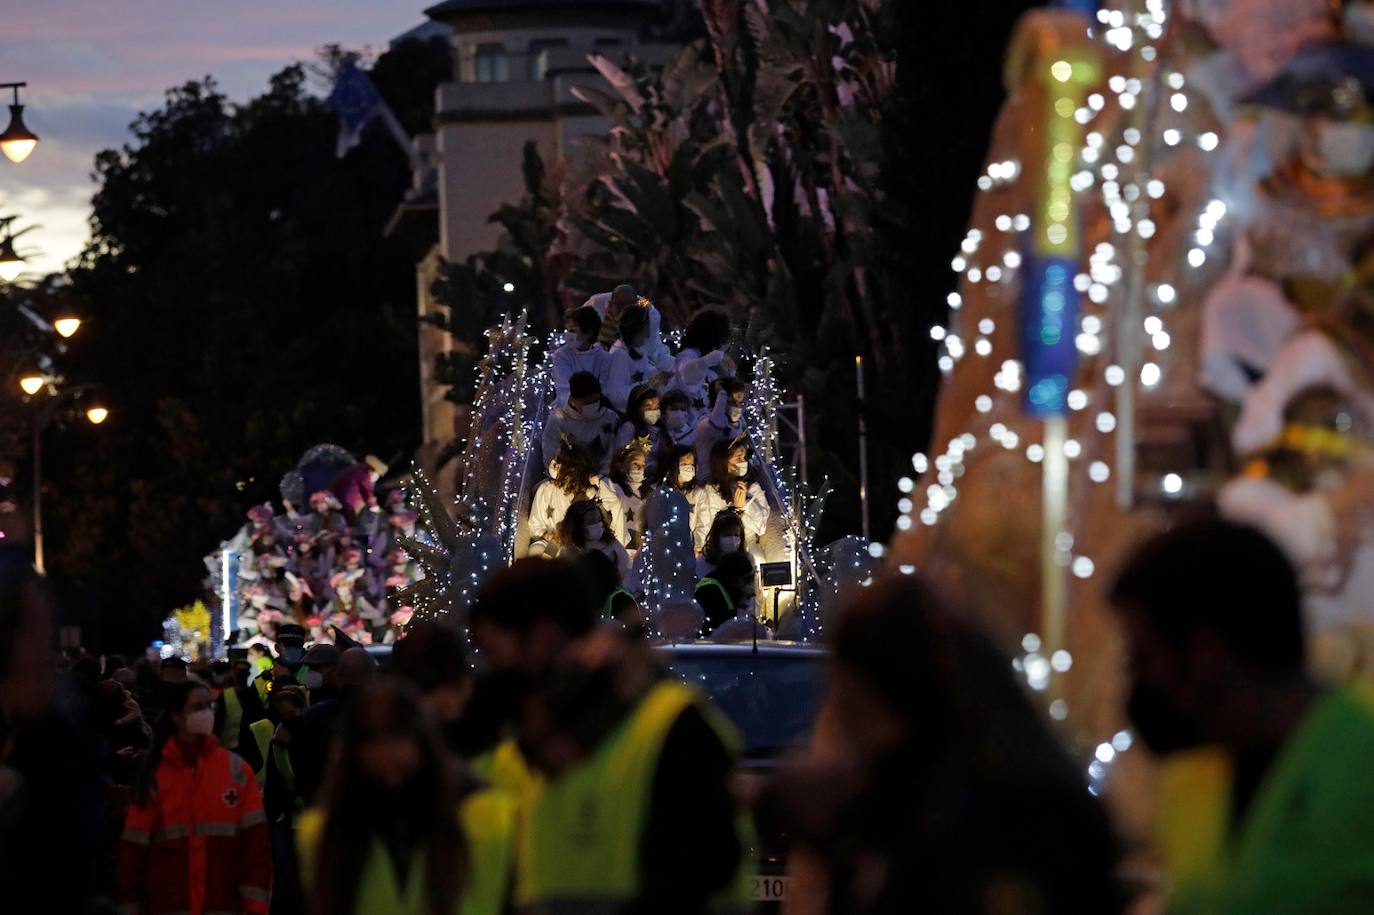 Malaga's Three Kings parade 2022.